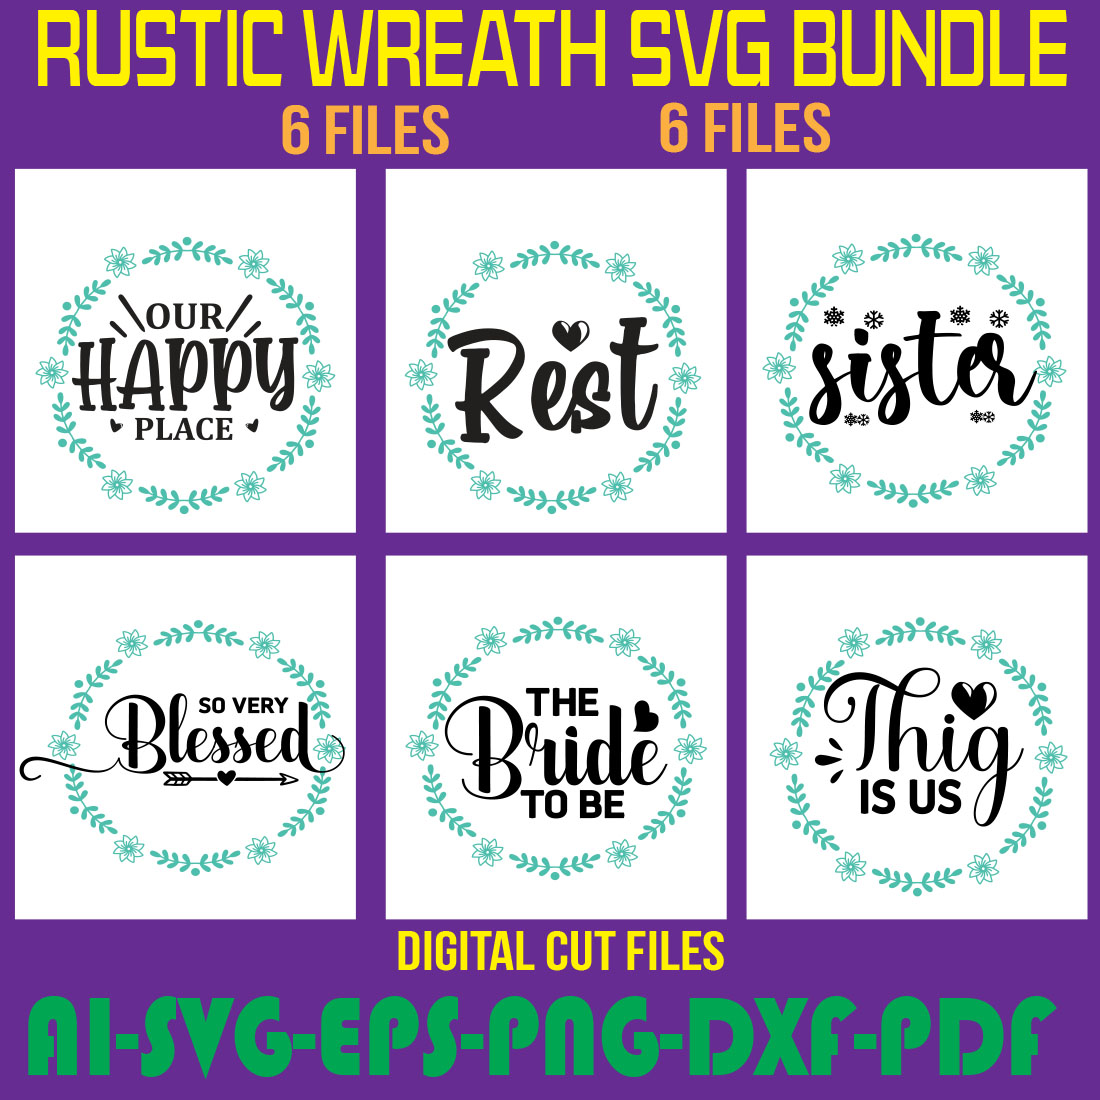 Rustic Wreath SVG Bundle cover image.